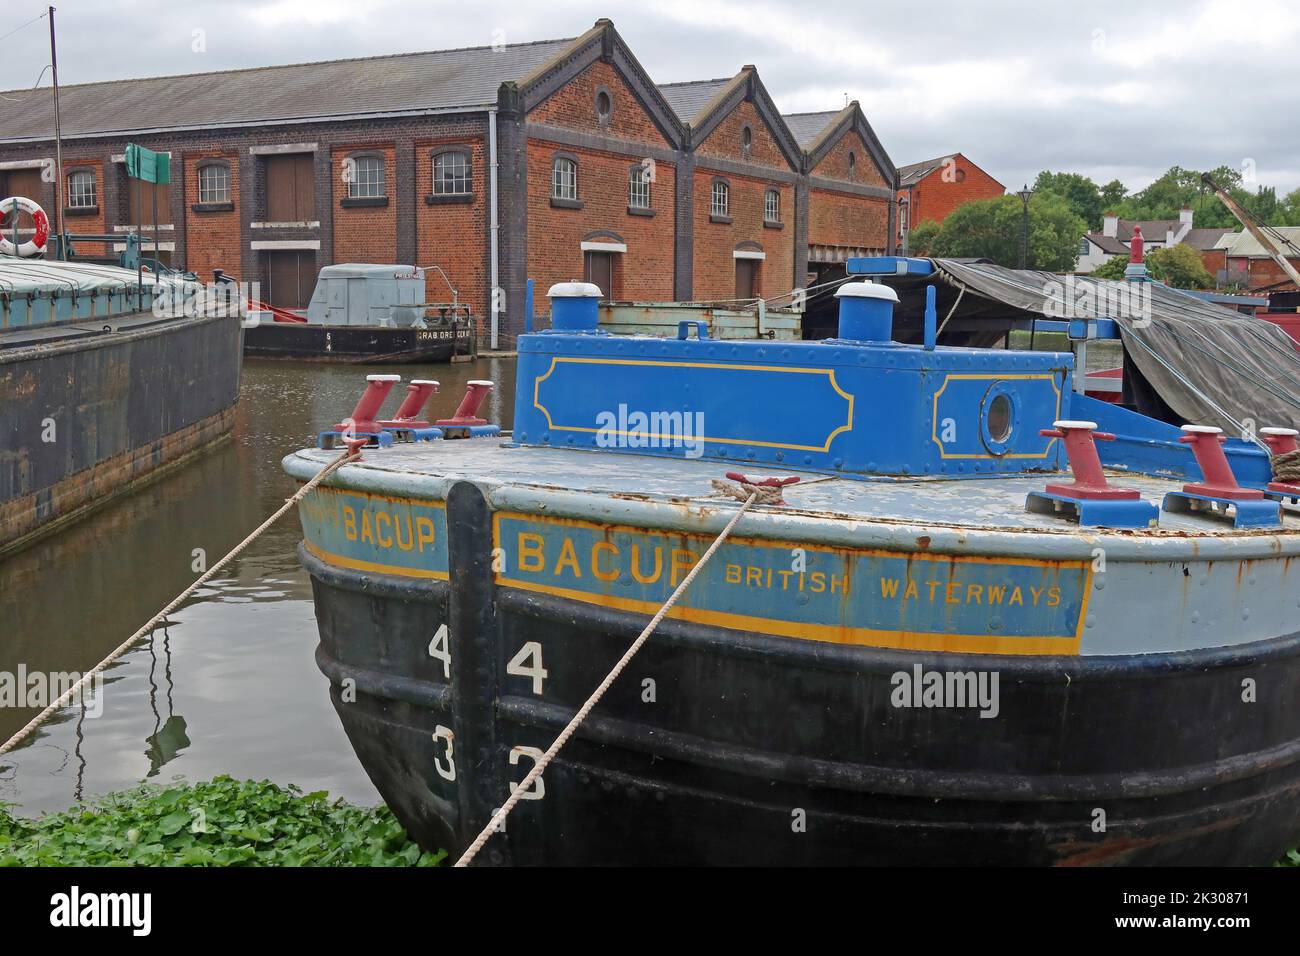 Bacup barge British Waterways Liverpool- Narrowboats on historic English canals, Cheshire, England, UK Stock Photo